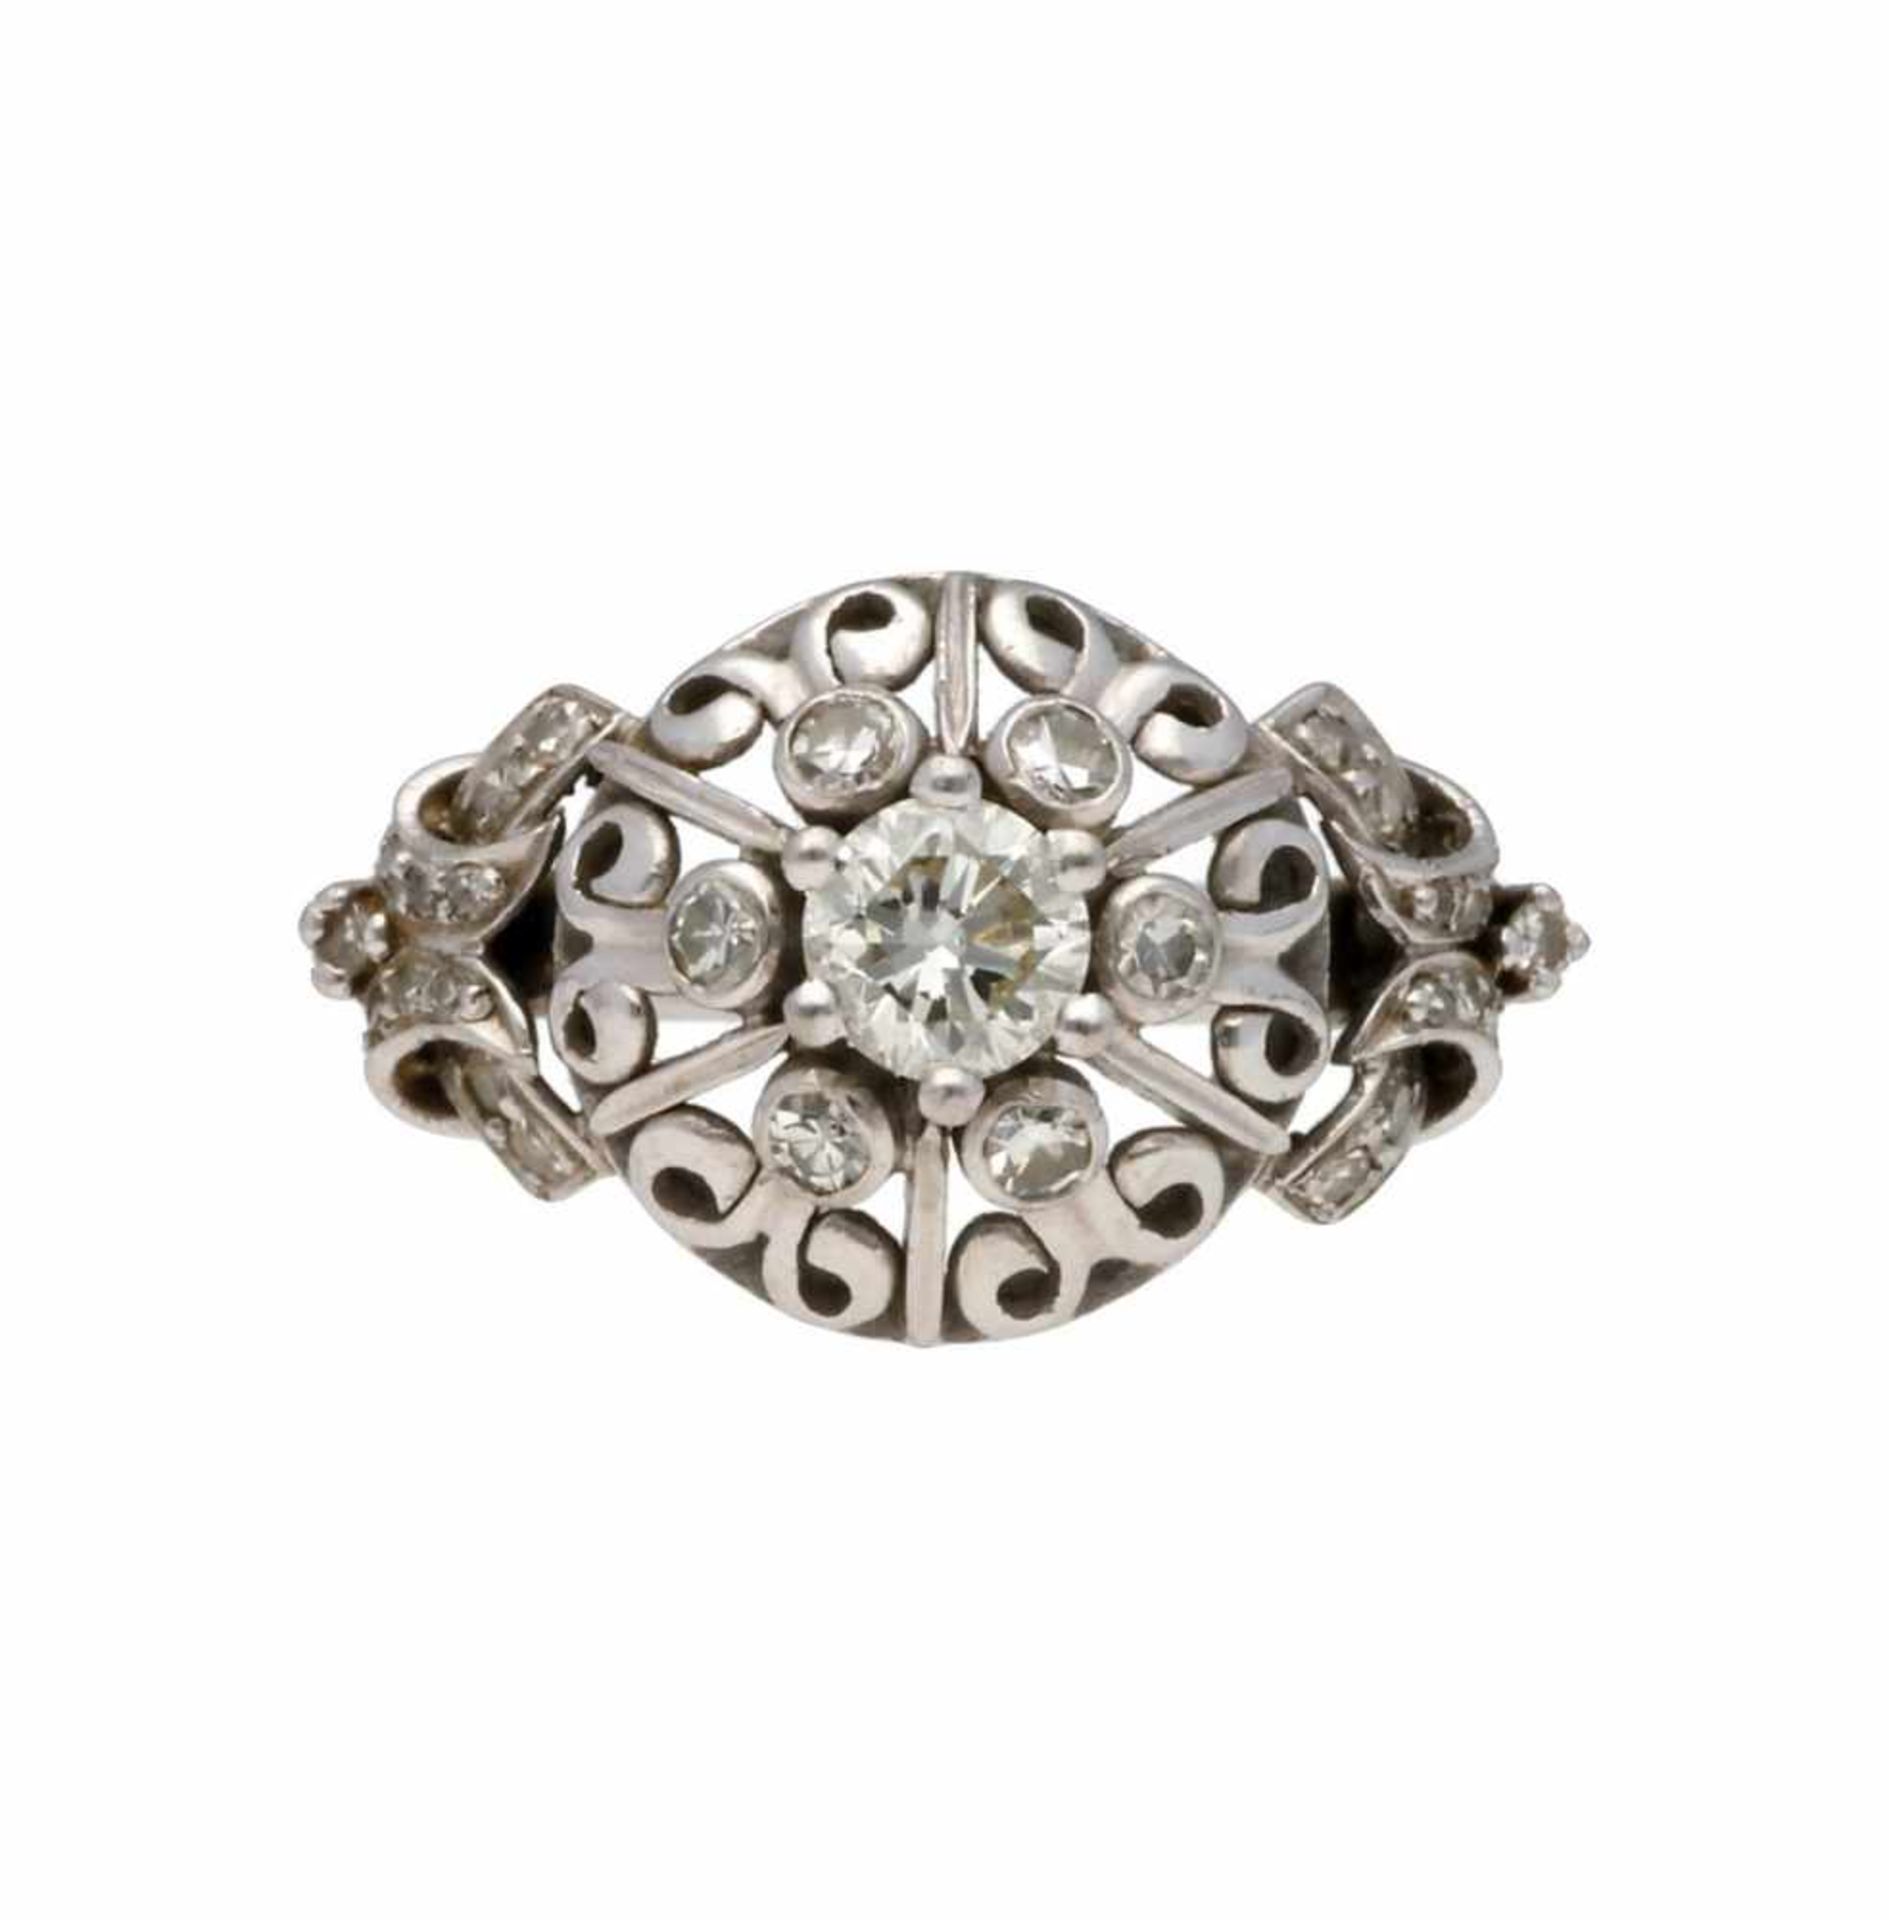 Diamonds ring, circa 1950.Platinum and brilliant and 8/8 cut diamonds, 0.55 cts.